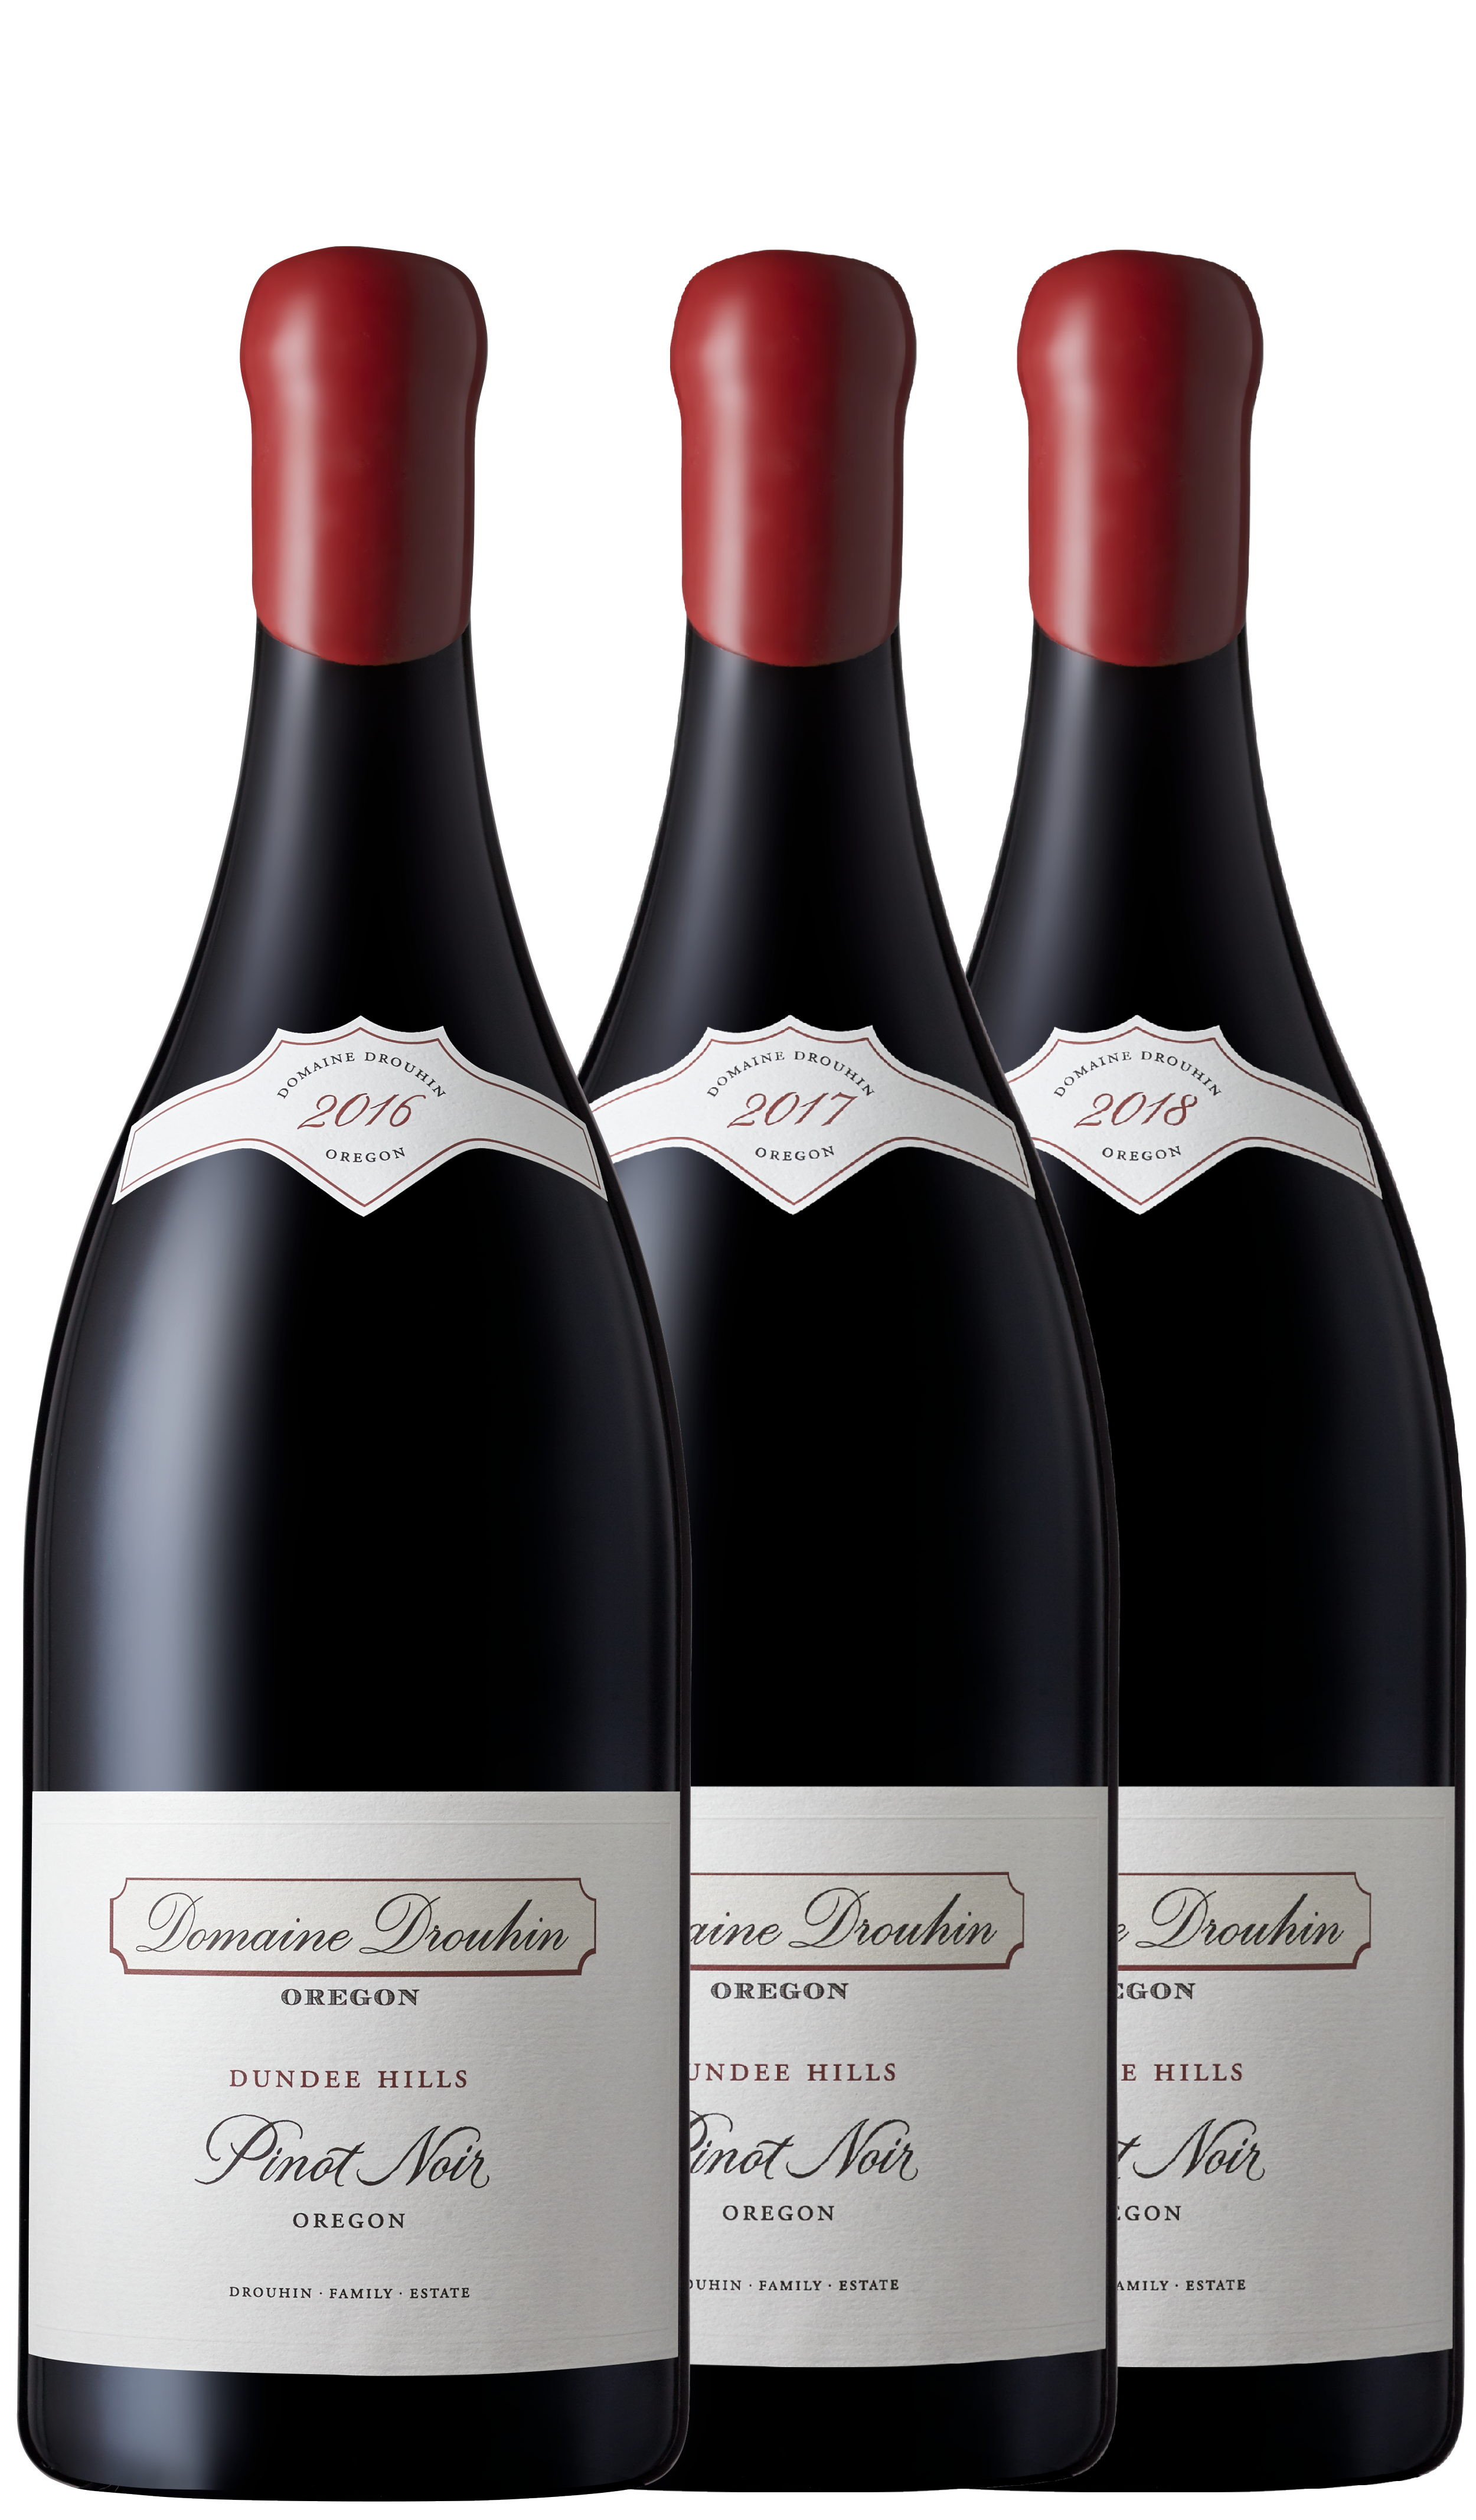 Three bottles of Domaine Drouhin Oregon Pinot Noir